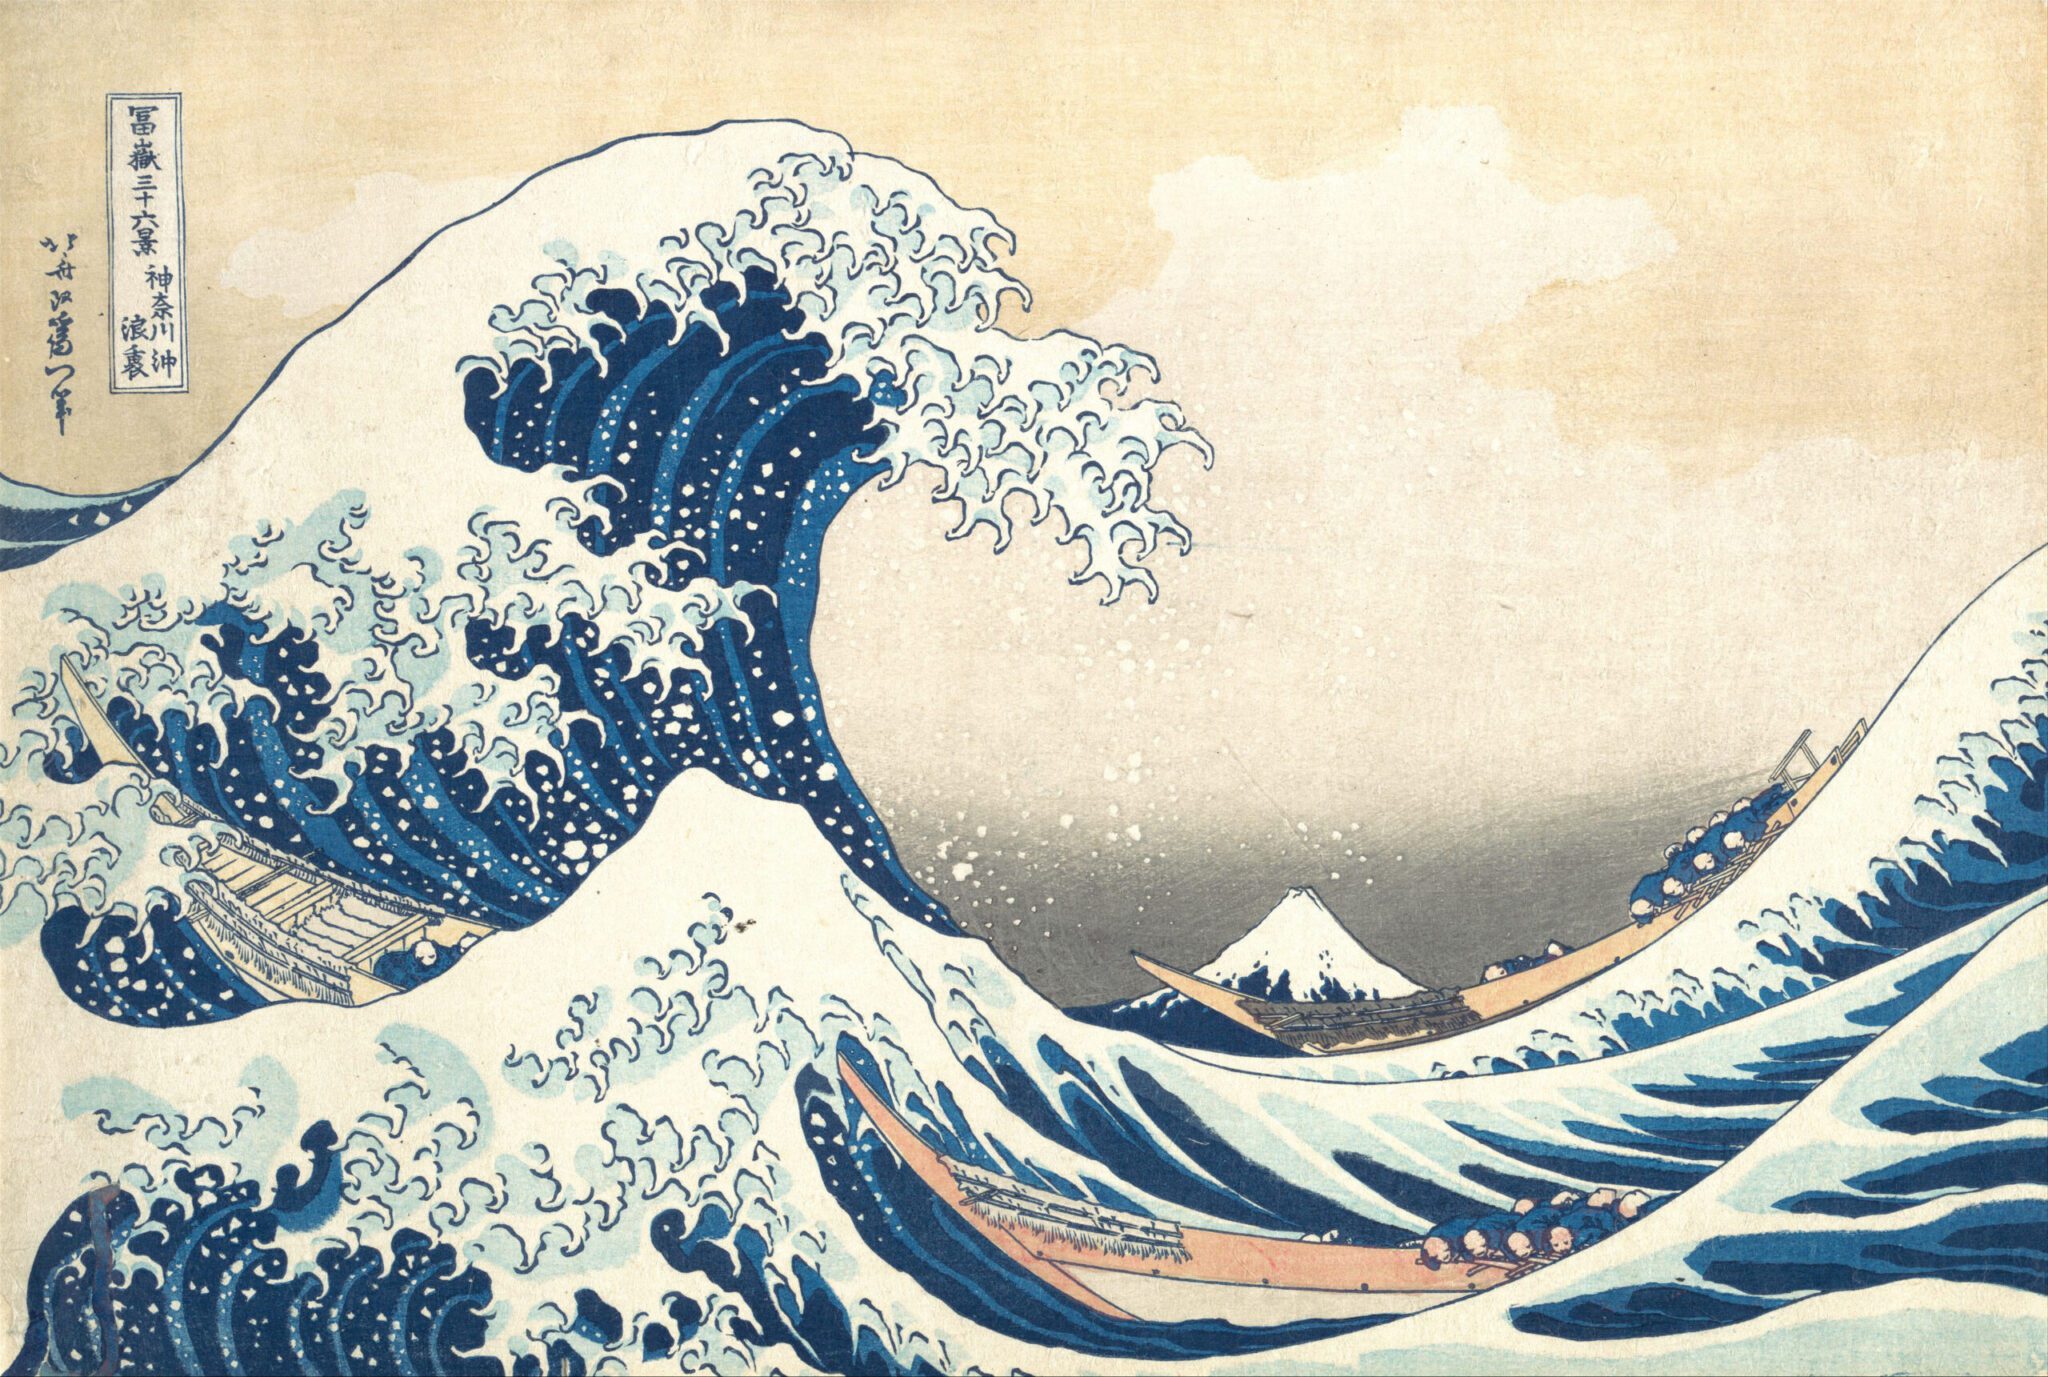 Photo of the Great Wave off Kanagawa by Kanagawa oki Nami Ura